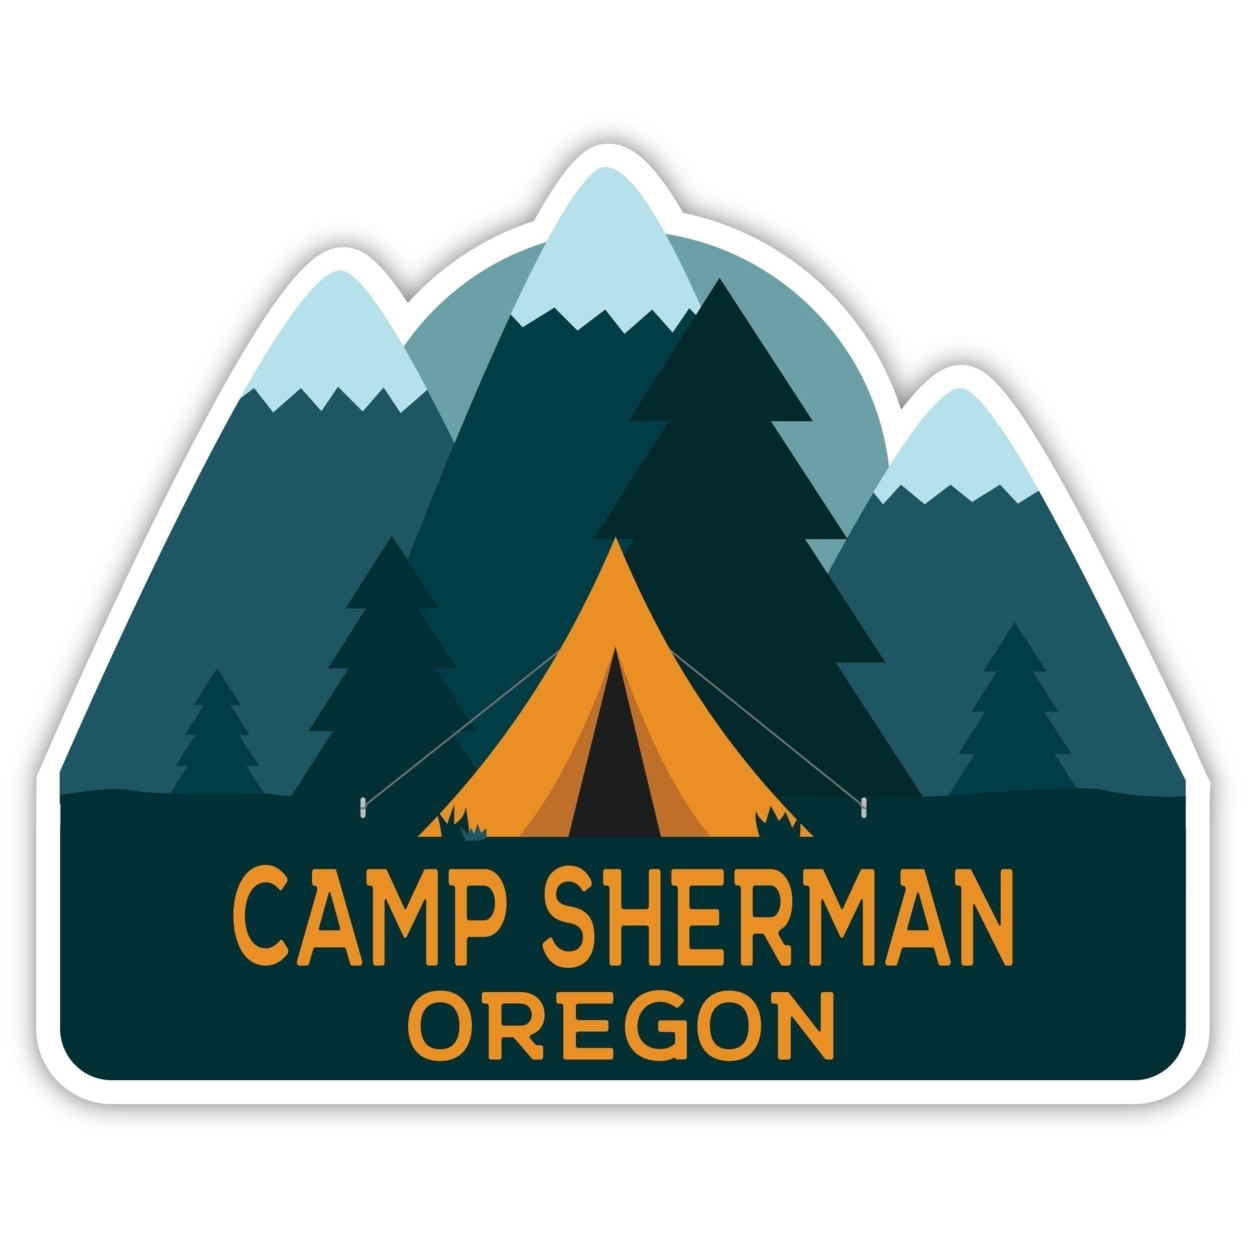 Camp Sherman Oregon Souvenir Decorative Stickers (Choose Theme And Size) - 4-Pack, 4-Inch, Tent